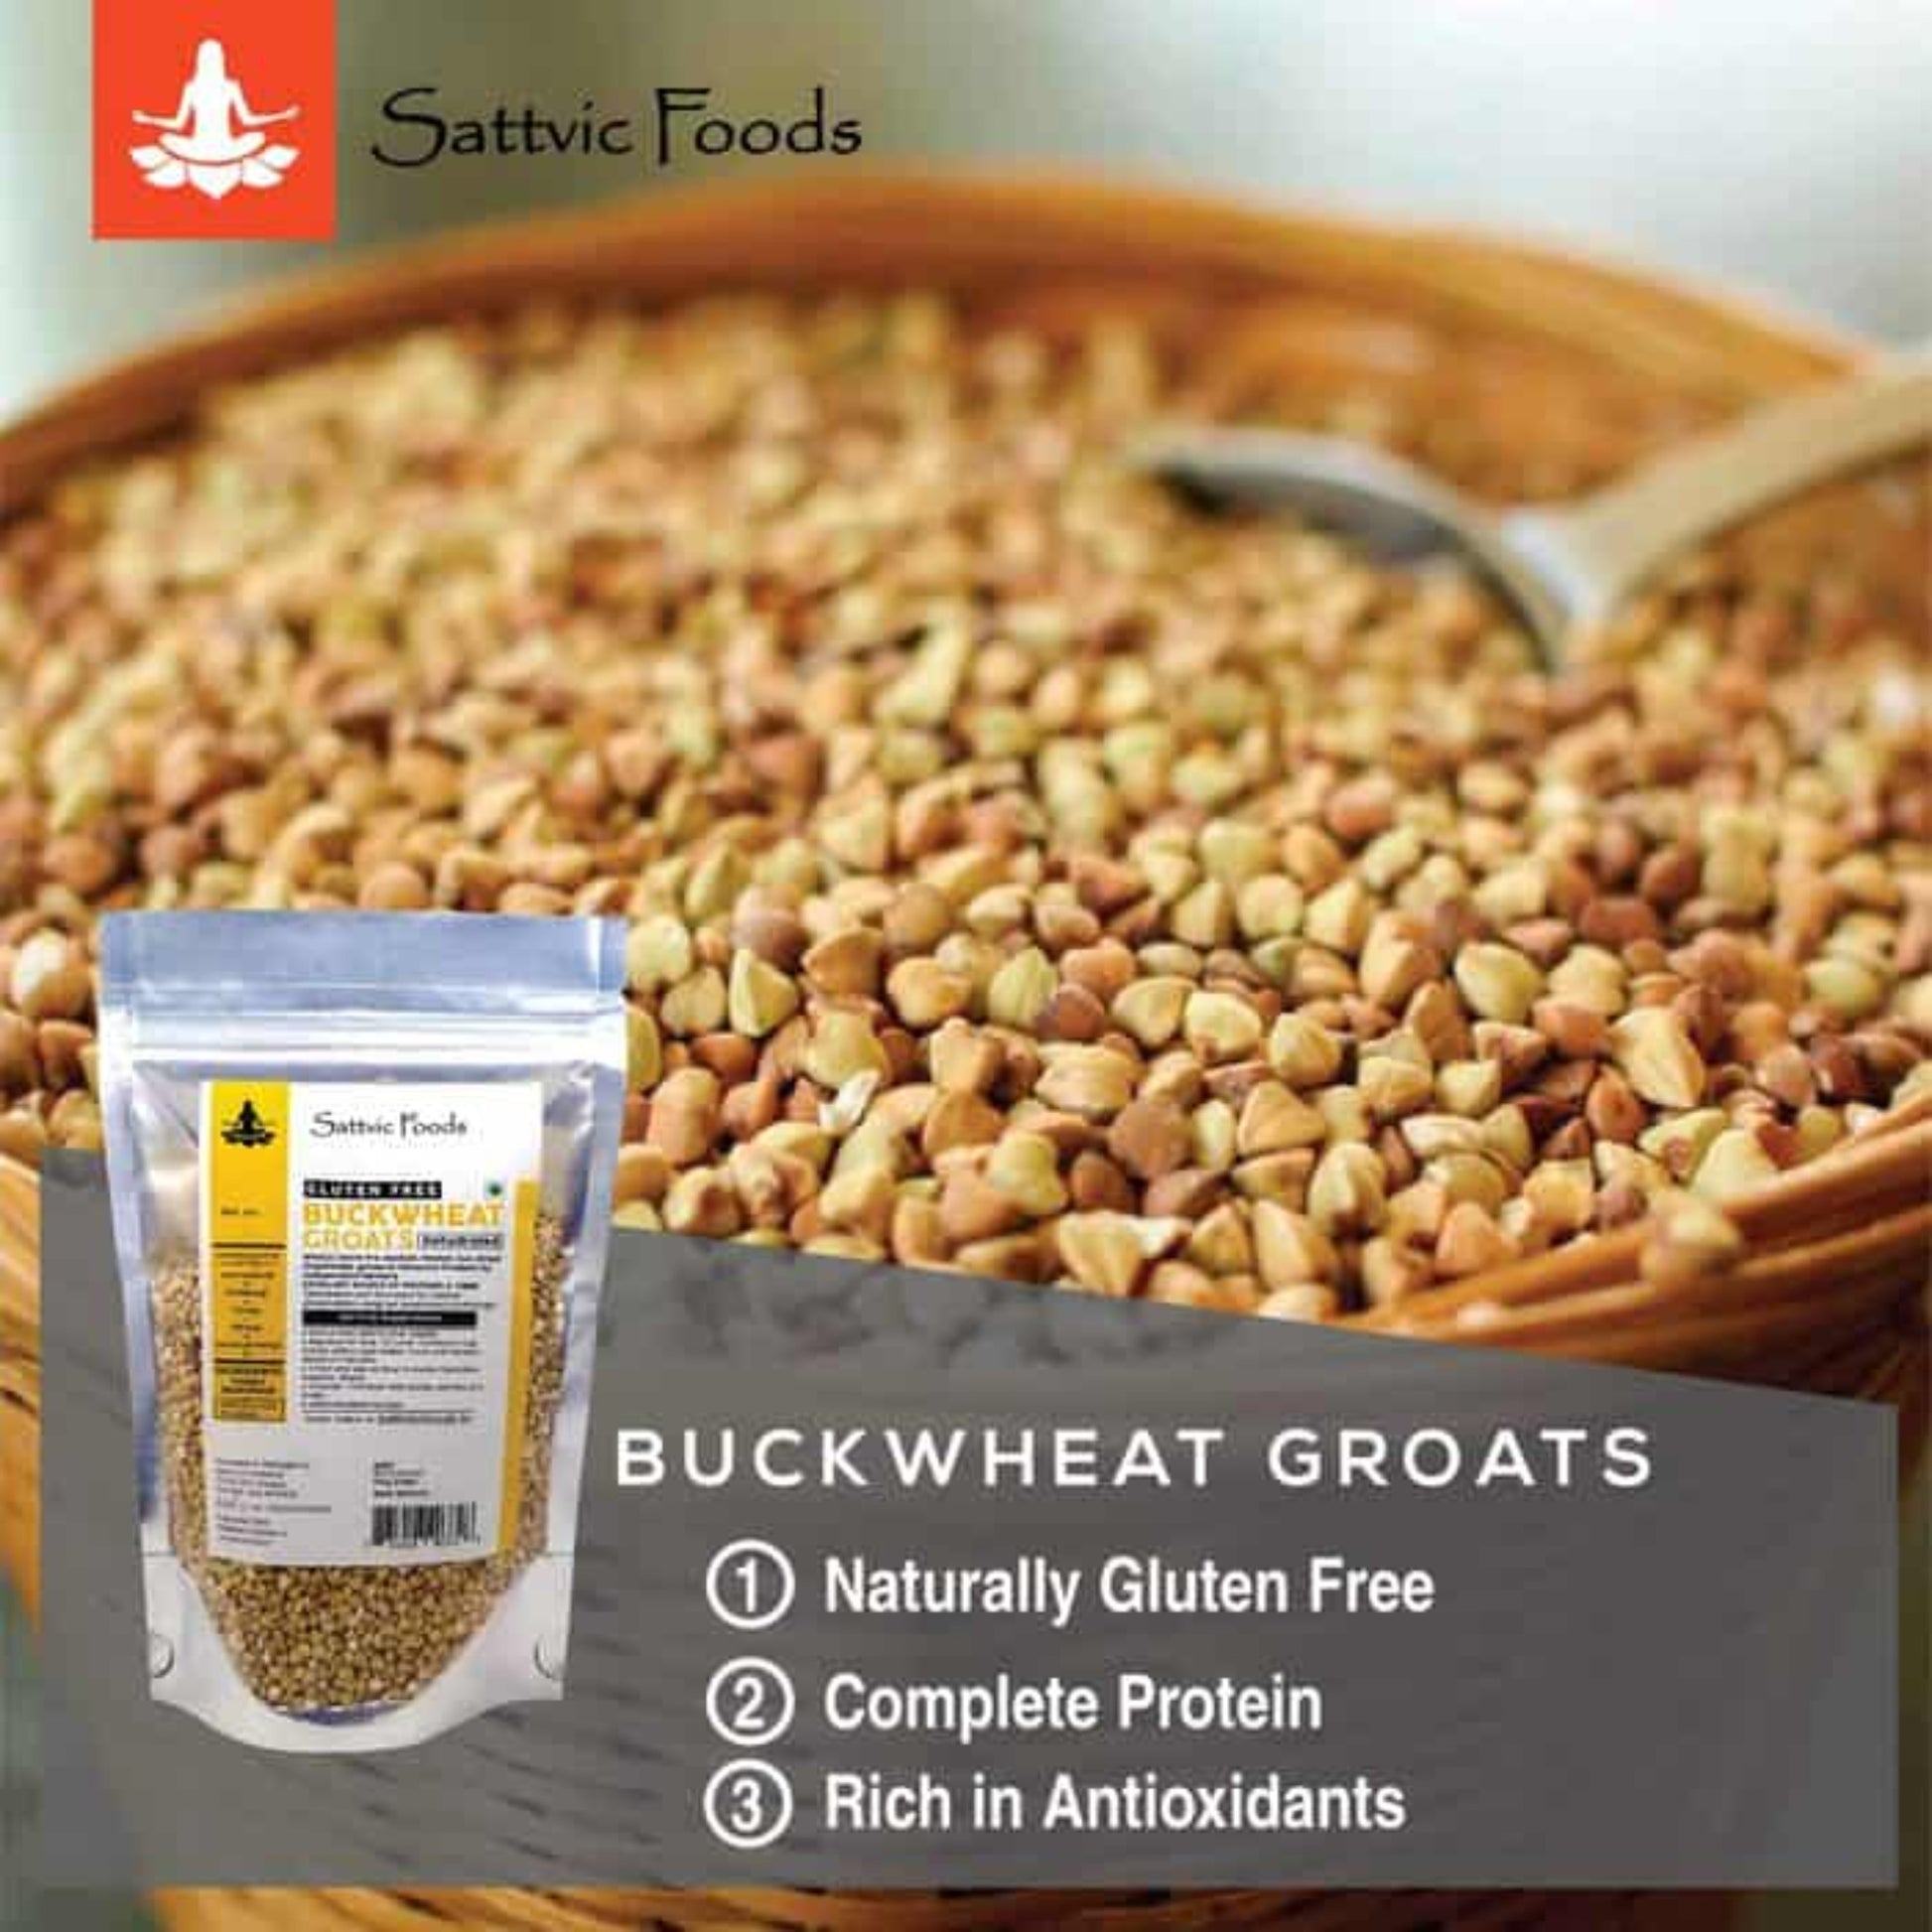 Buckwheat Groats (Gluten-free)